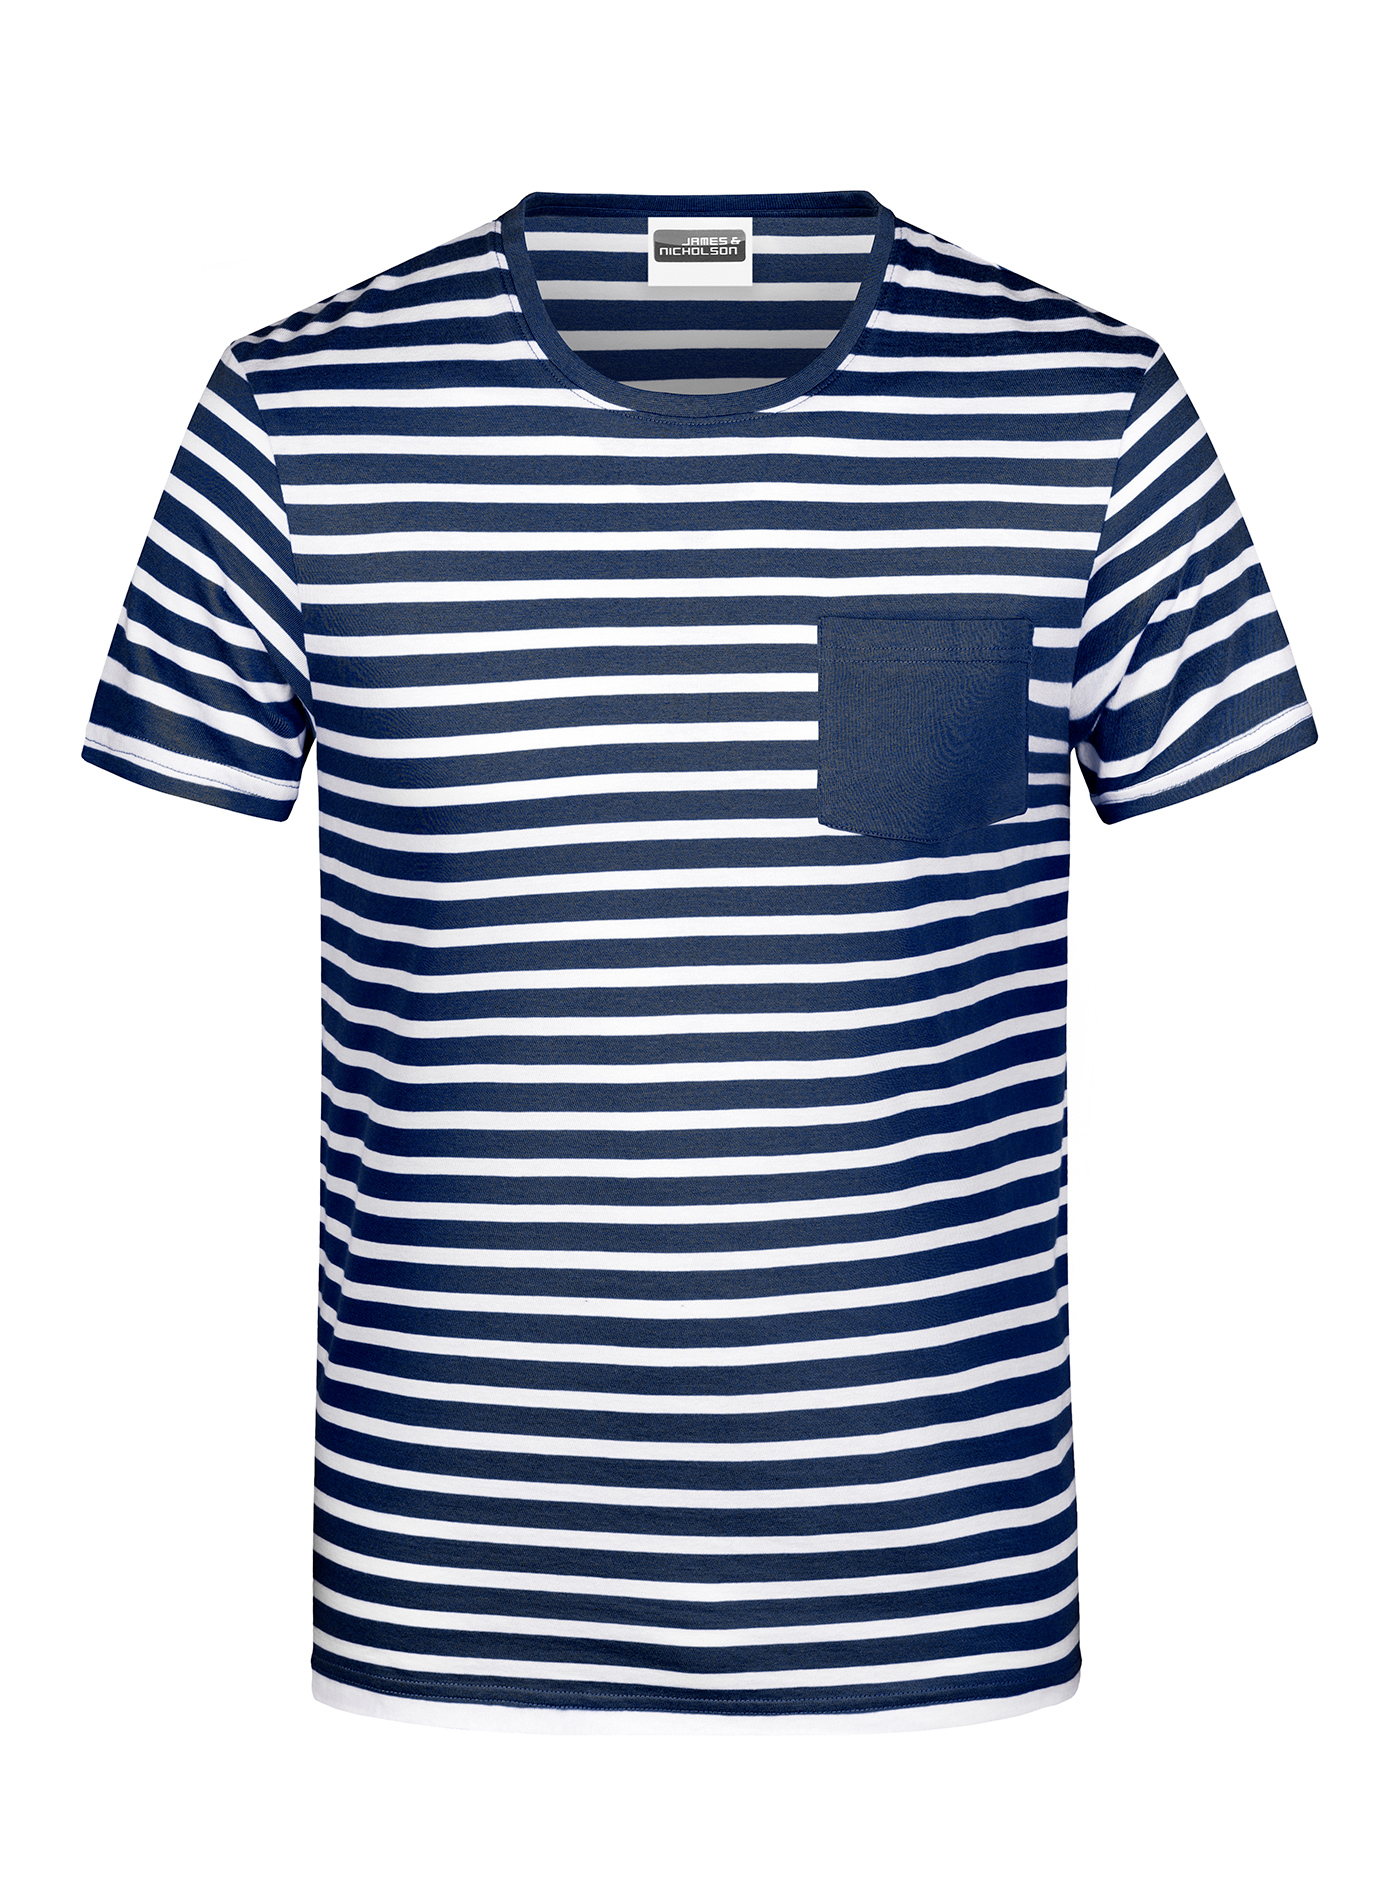 Pánské pruhované tričko James & Nicholson - Tmavě modrá a bílá 3XL